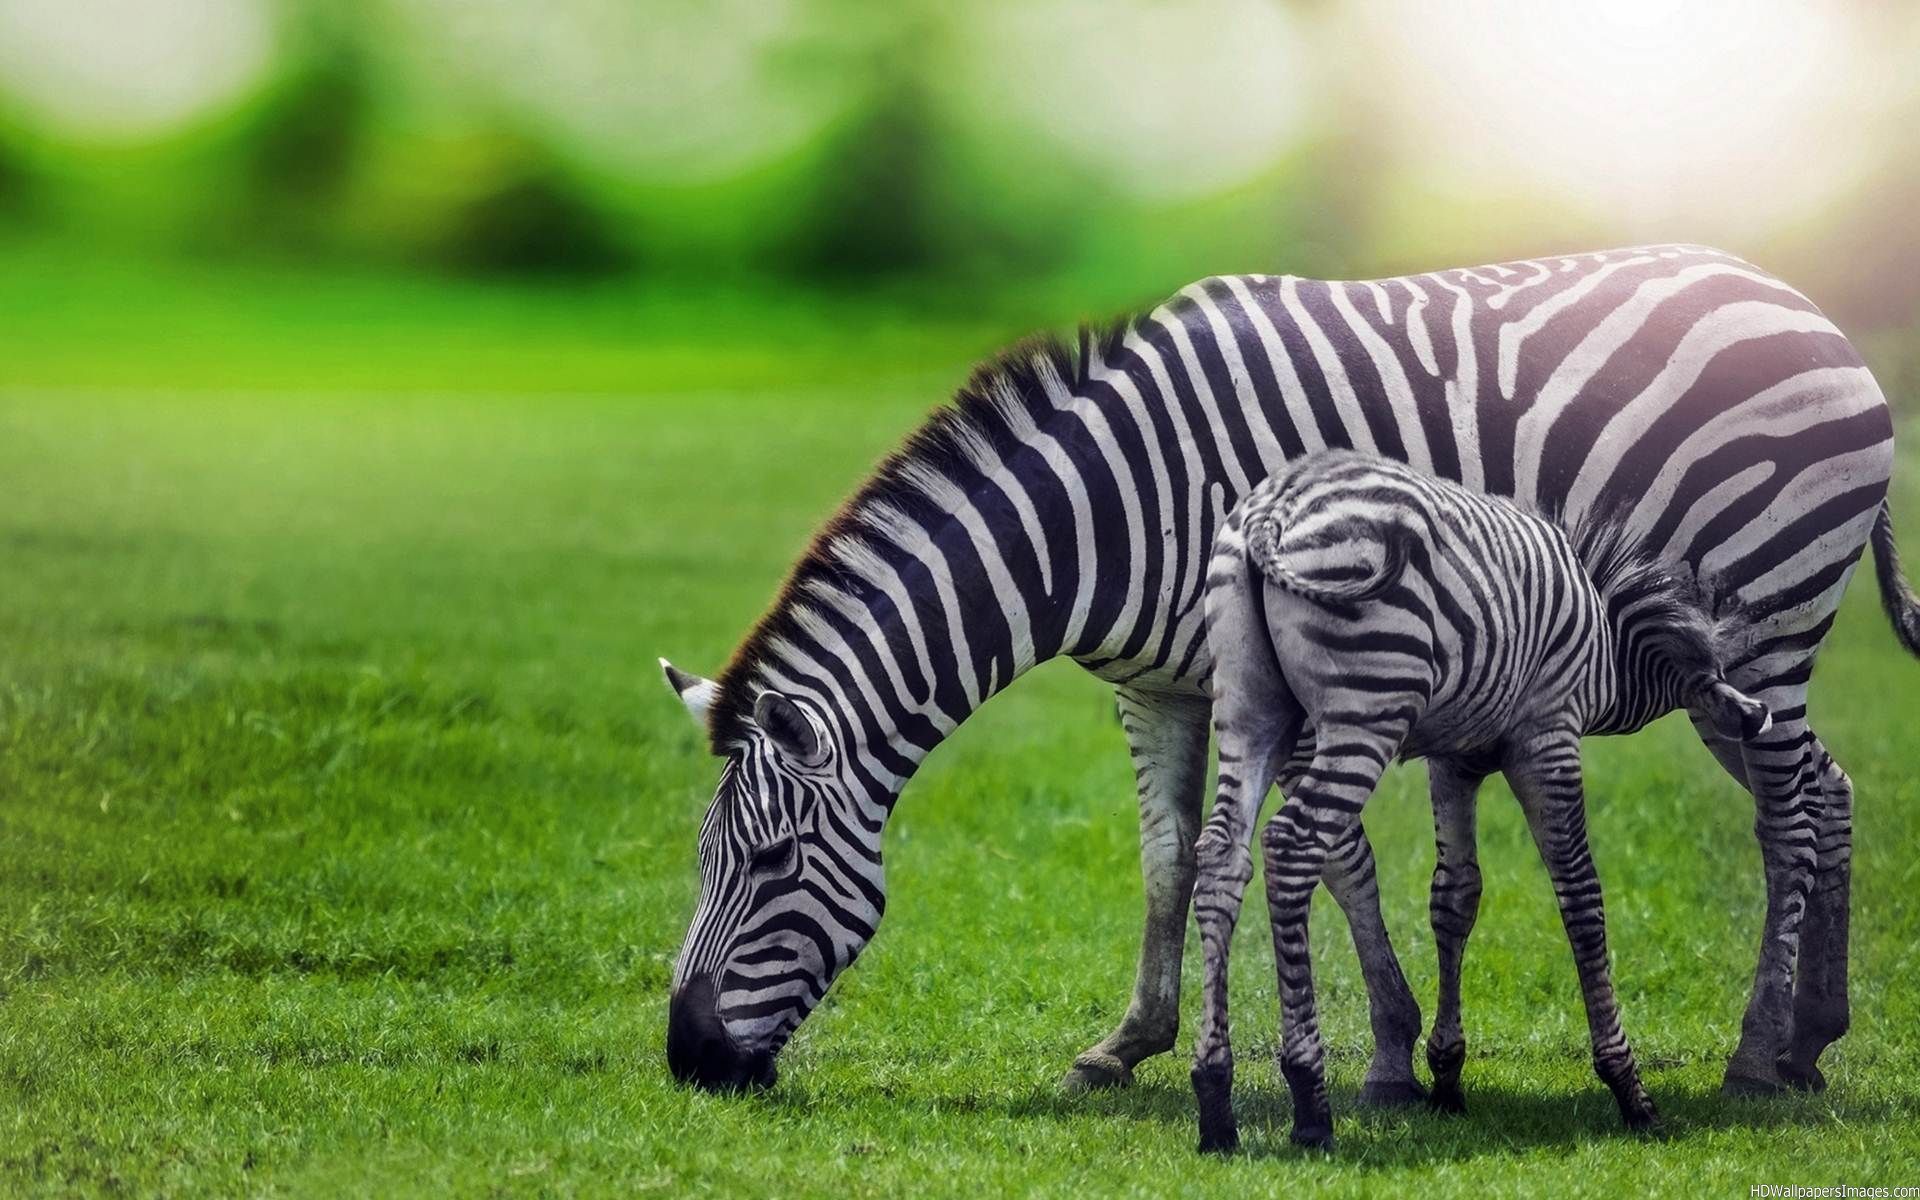 Free download Share the post Zebra Animal Wallpaper HD For Desktop